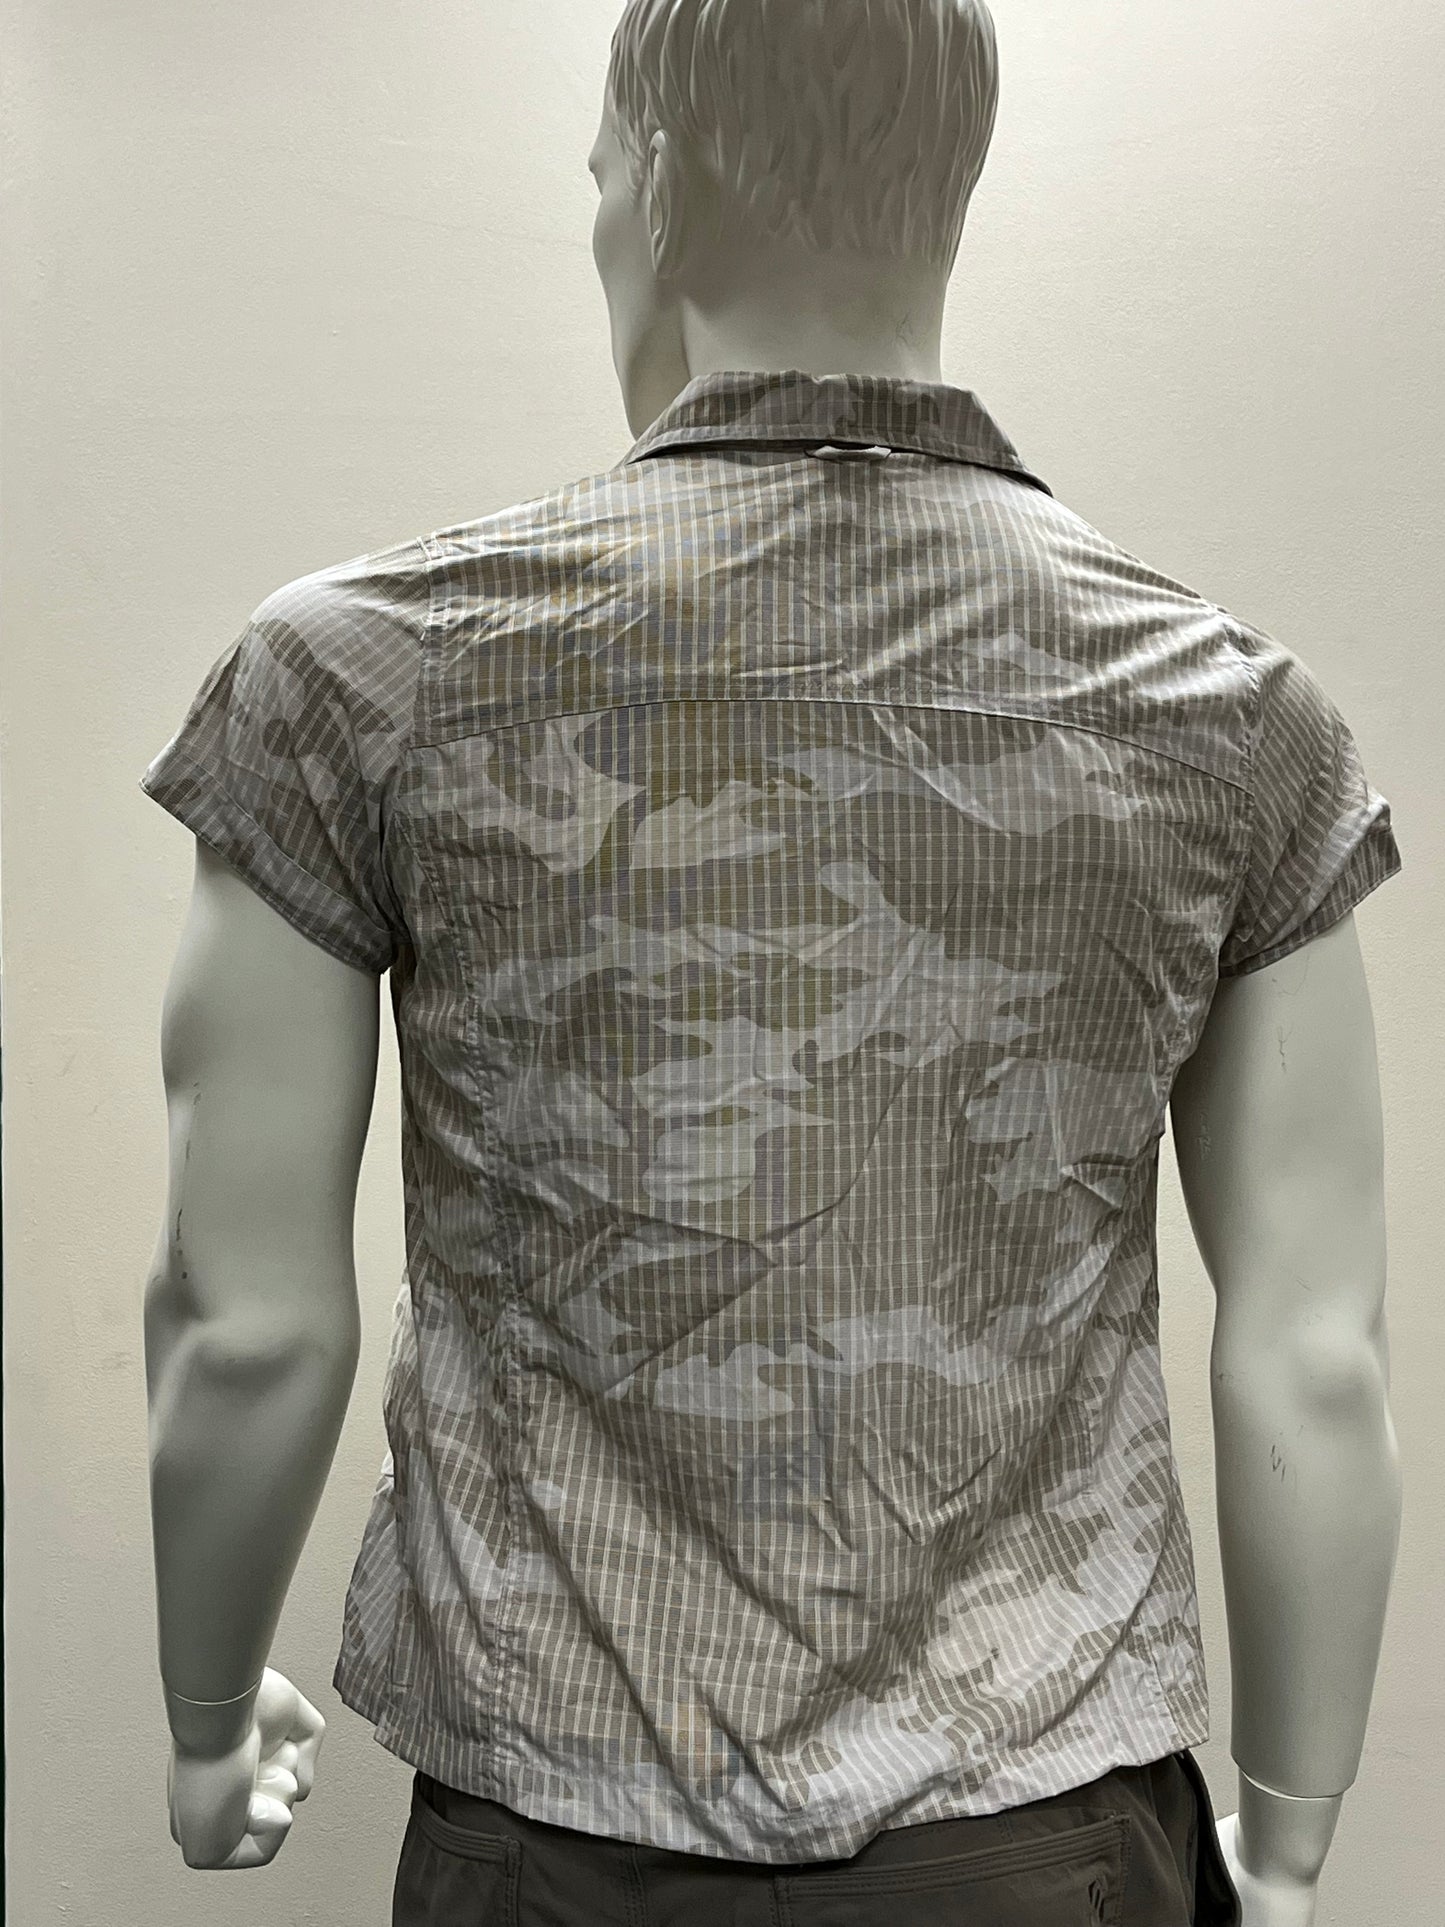 Tresspass Duo-Skin Mens Shirt in Brown Camo Print - Size XL